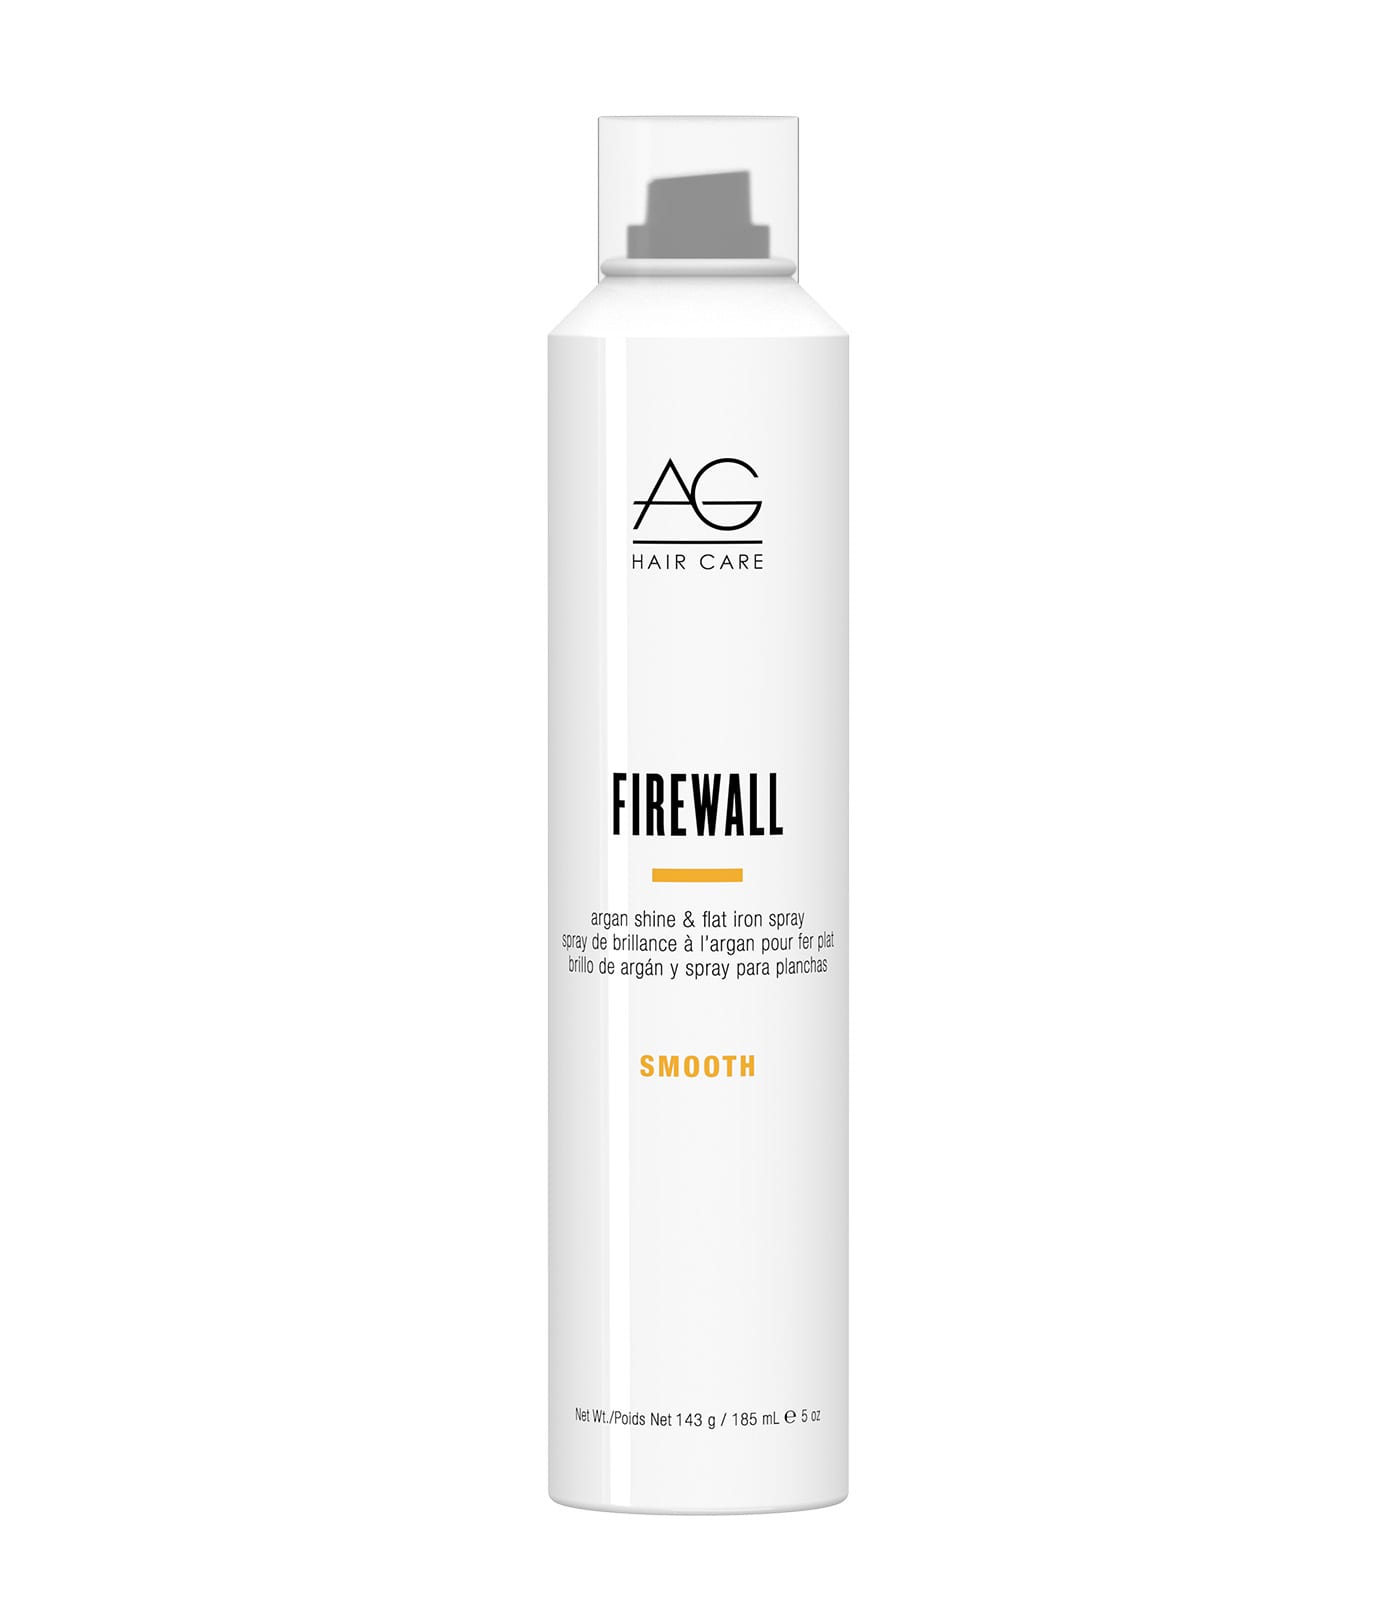 Firewall Argan Shine & Flat Iron Spray Smooth AG Hair - 185 Ml - Style En  Tête Salon — Spa